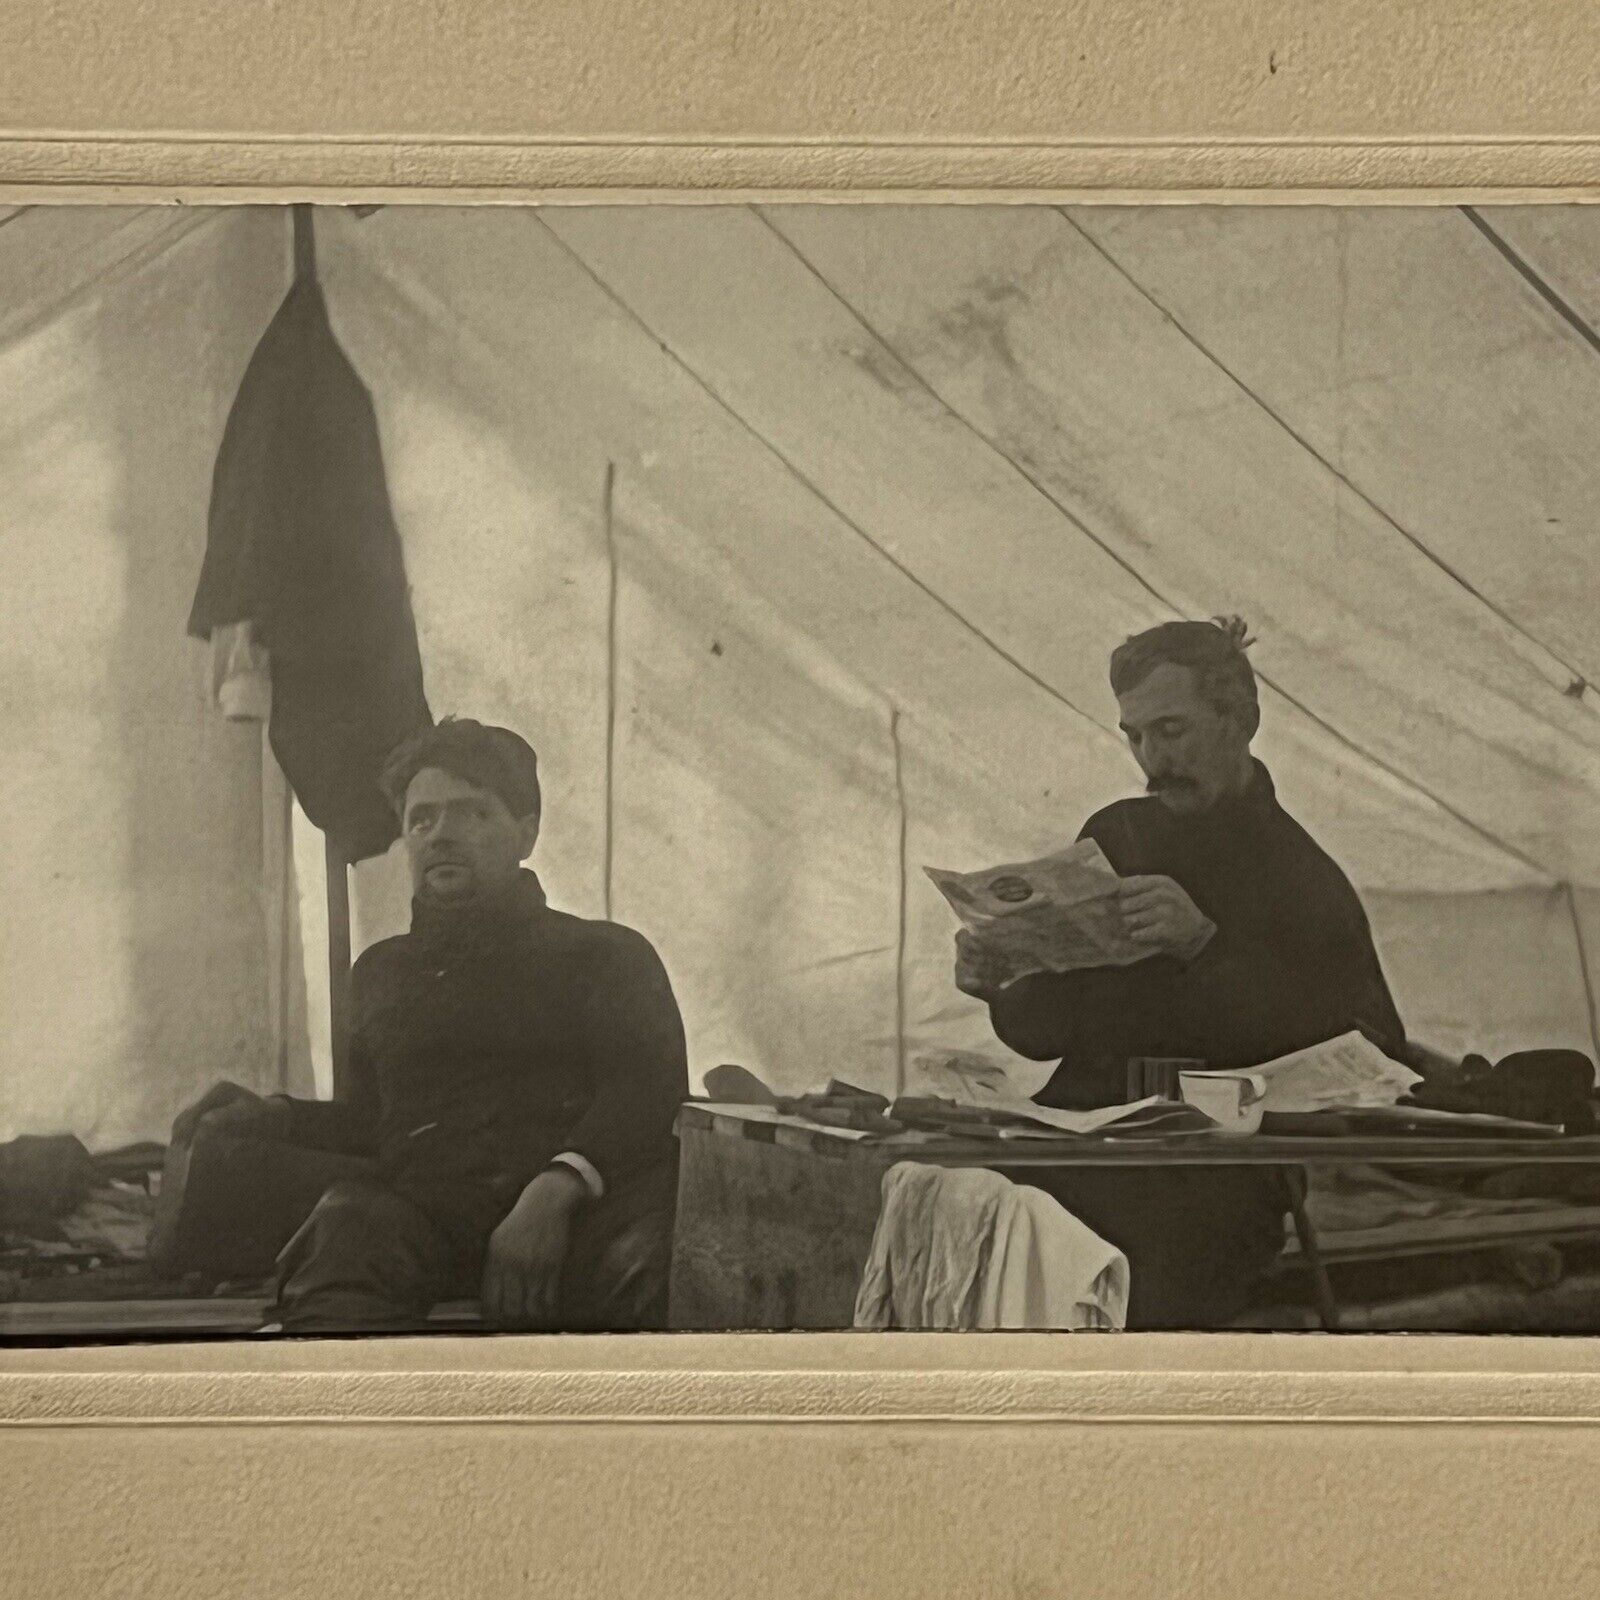 Antique Cabinet Card Photograph Handsome Man Encampment Tent Military? Soldiers?